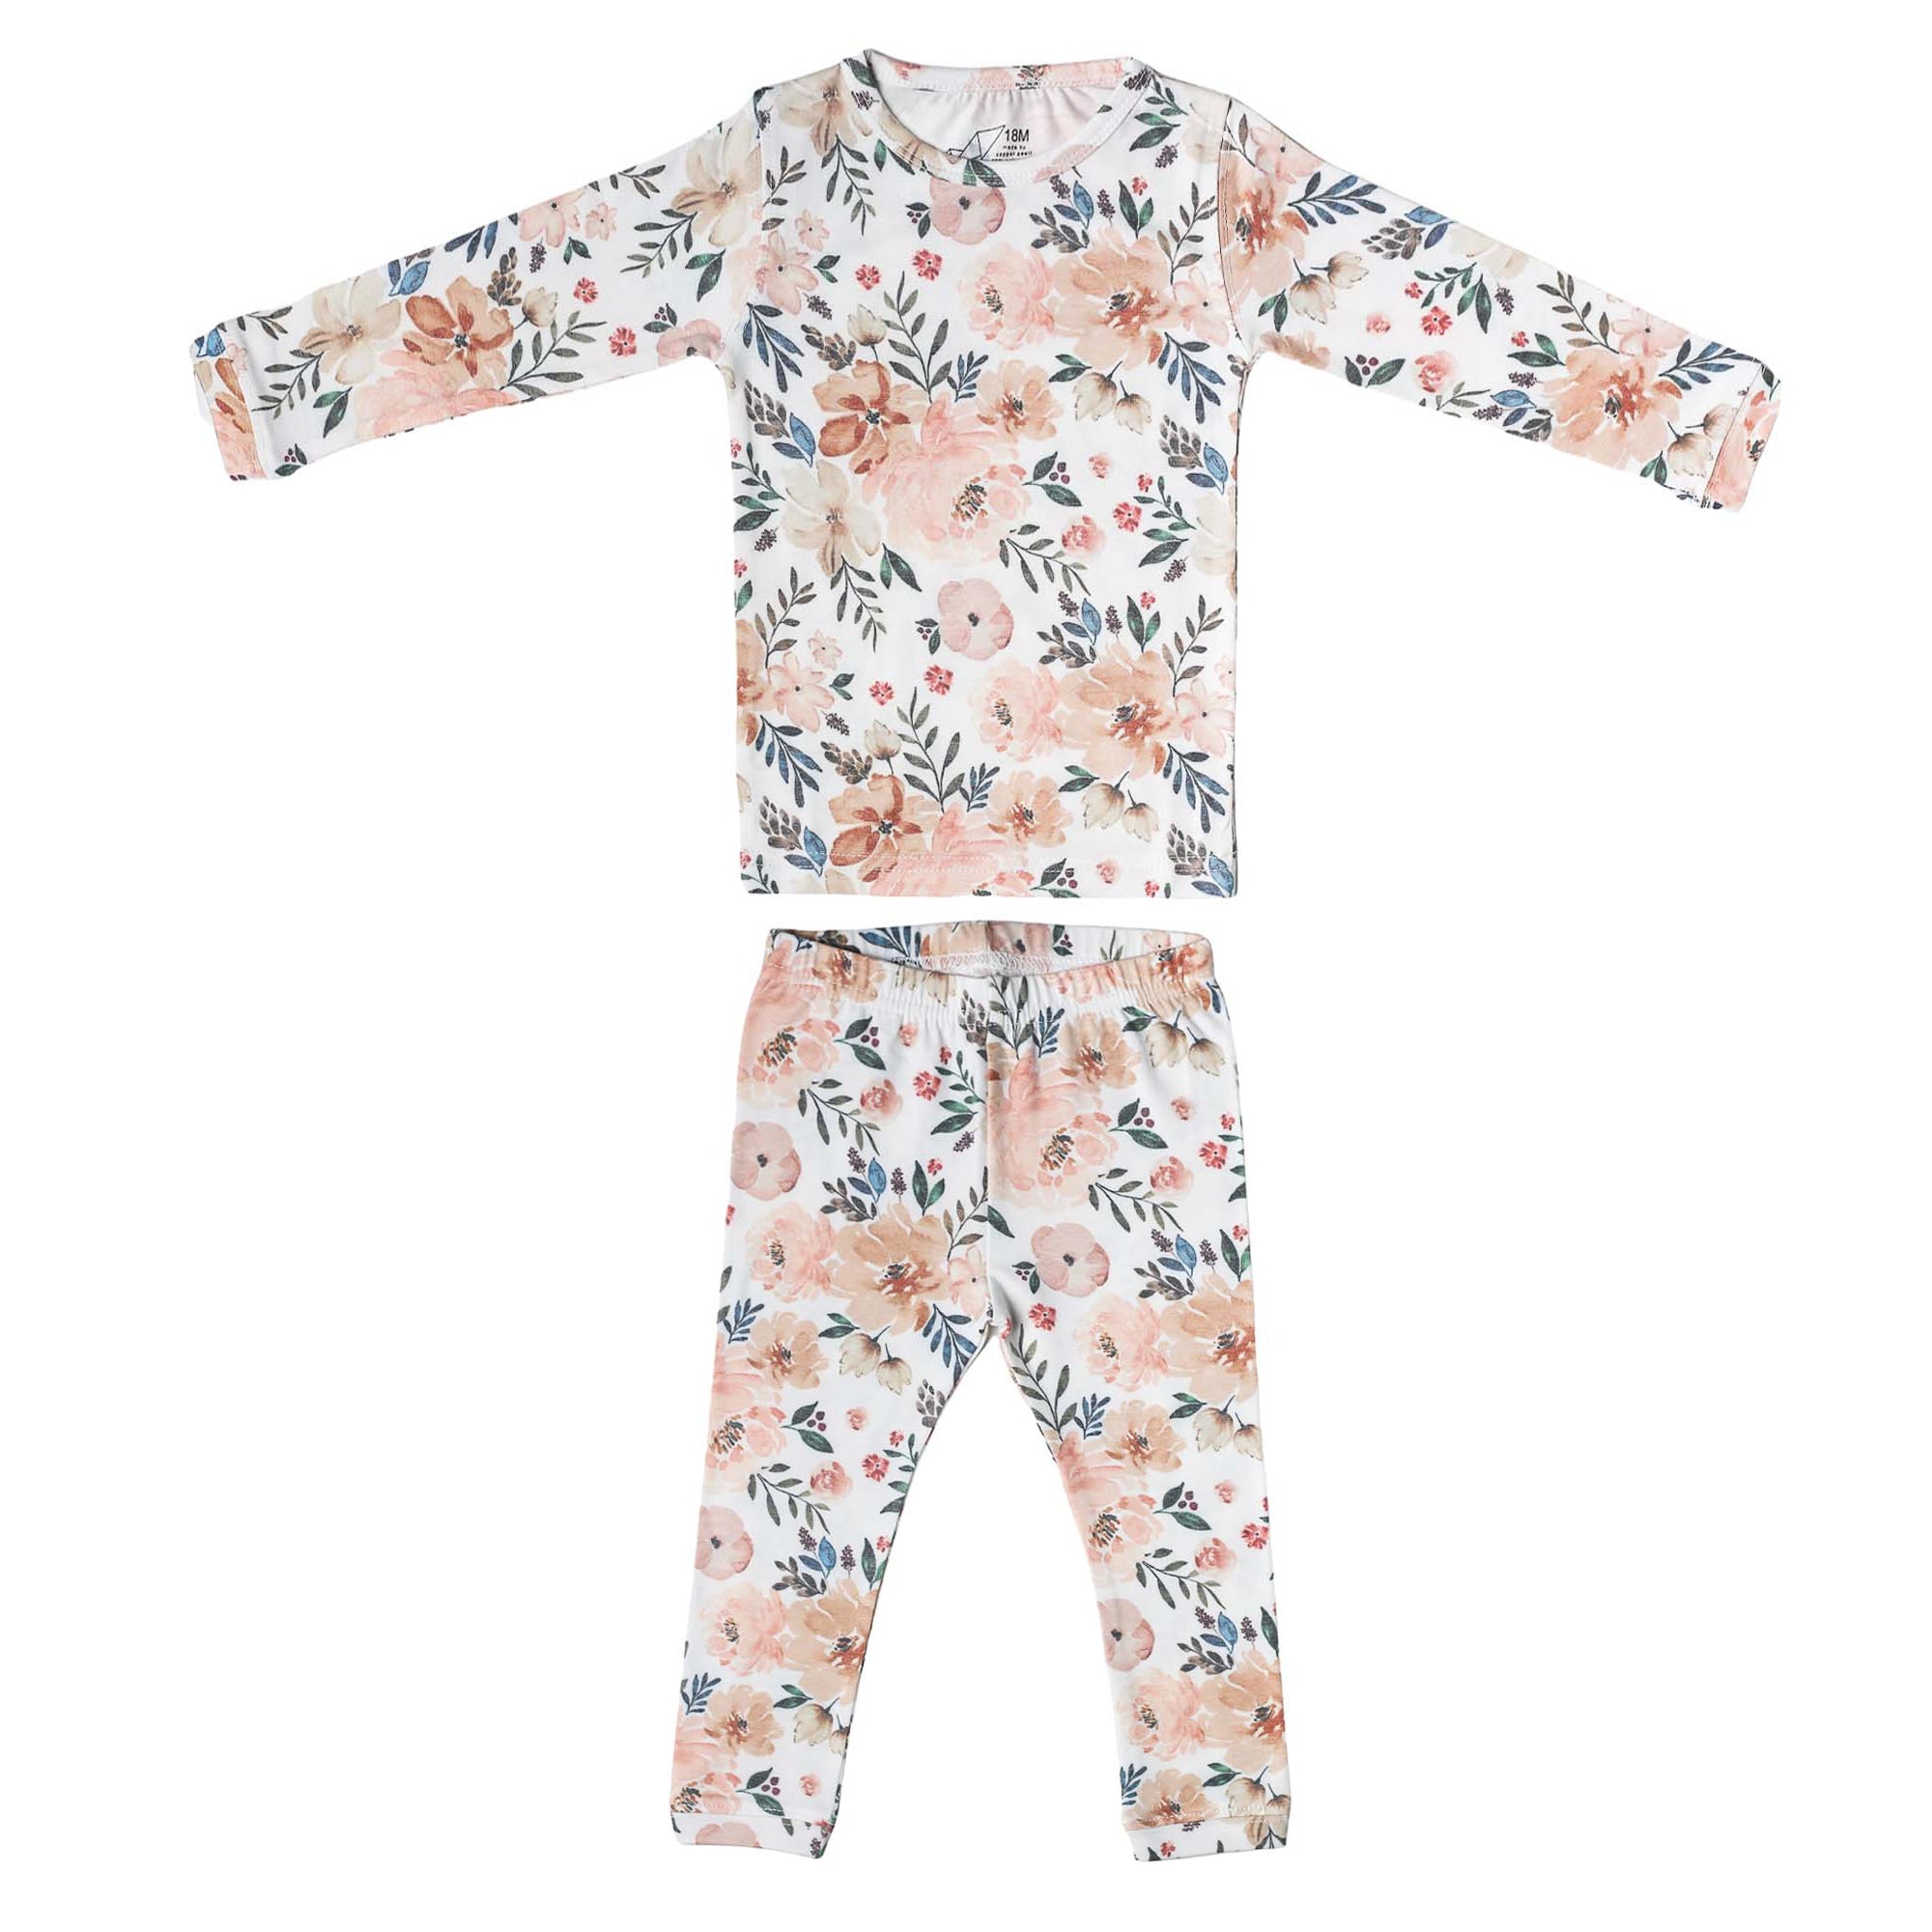 2pc Long Sleeve Pajama Set - Autumn